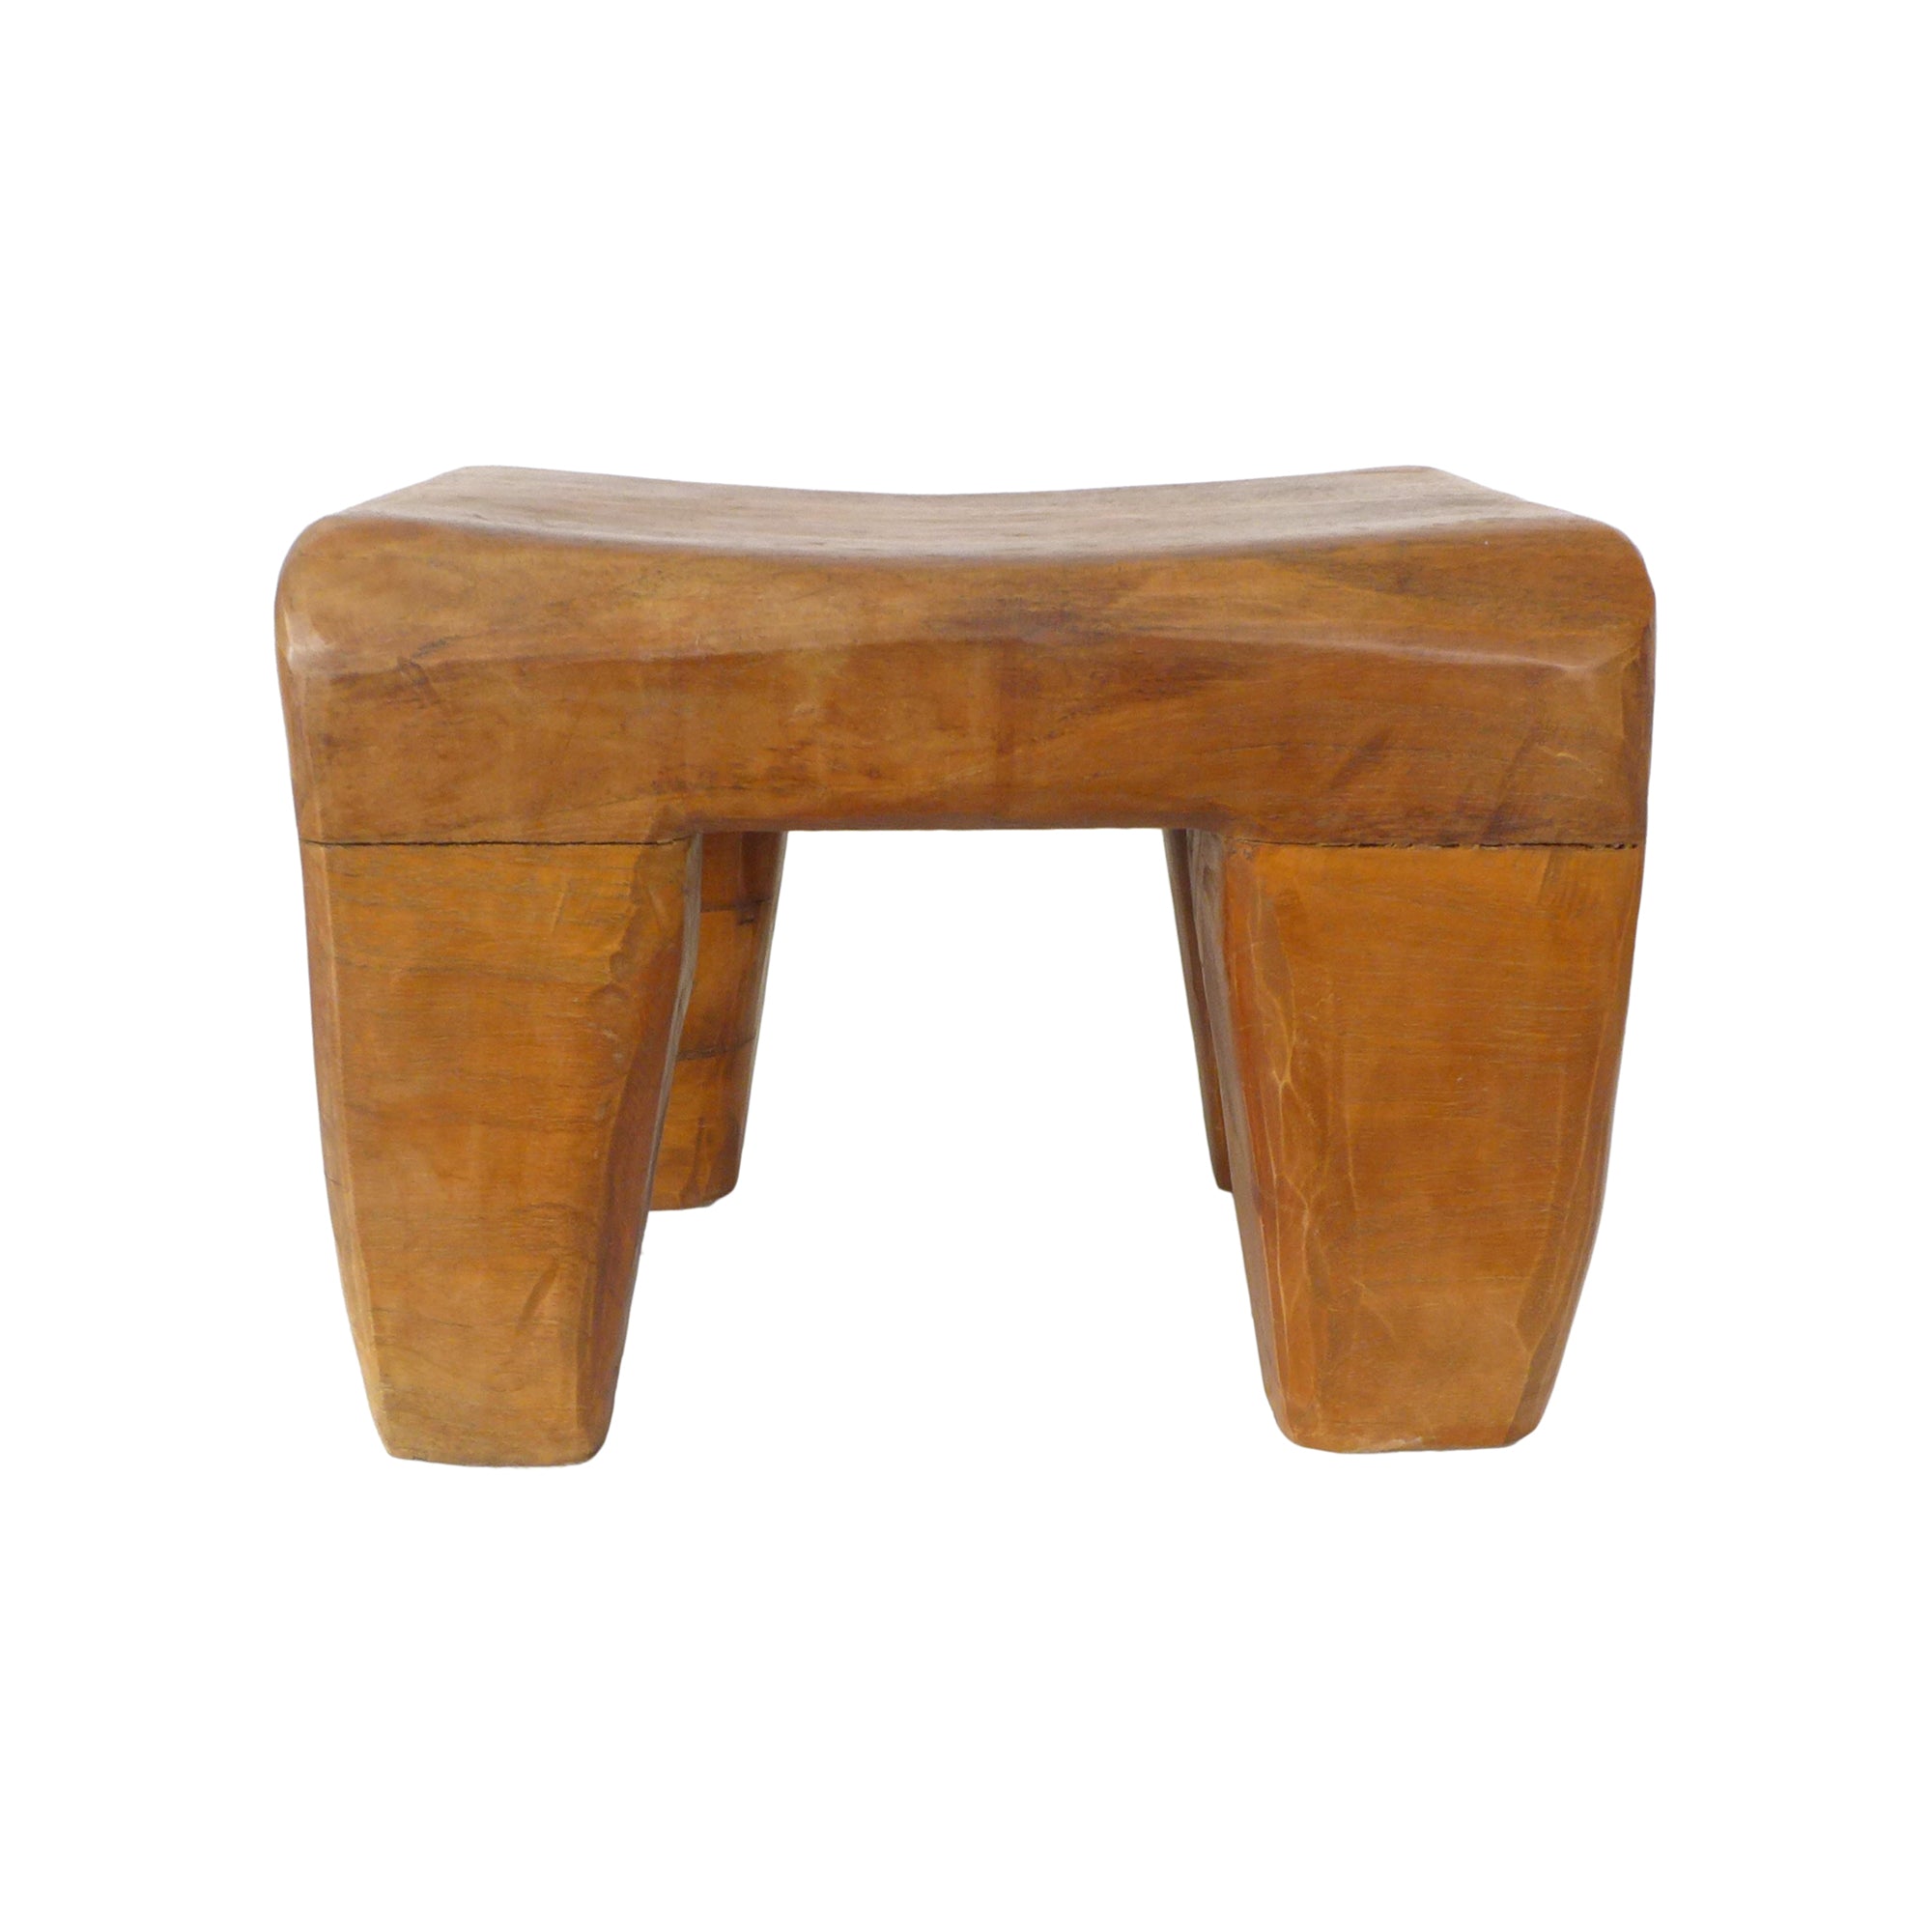 Chunky wood stool